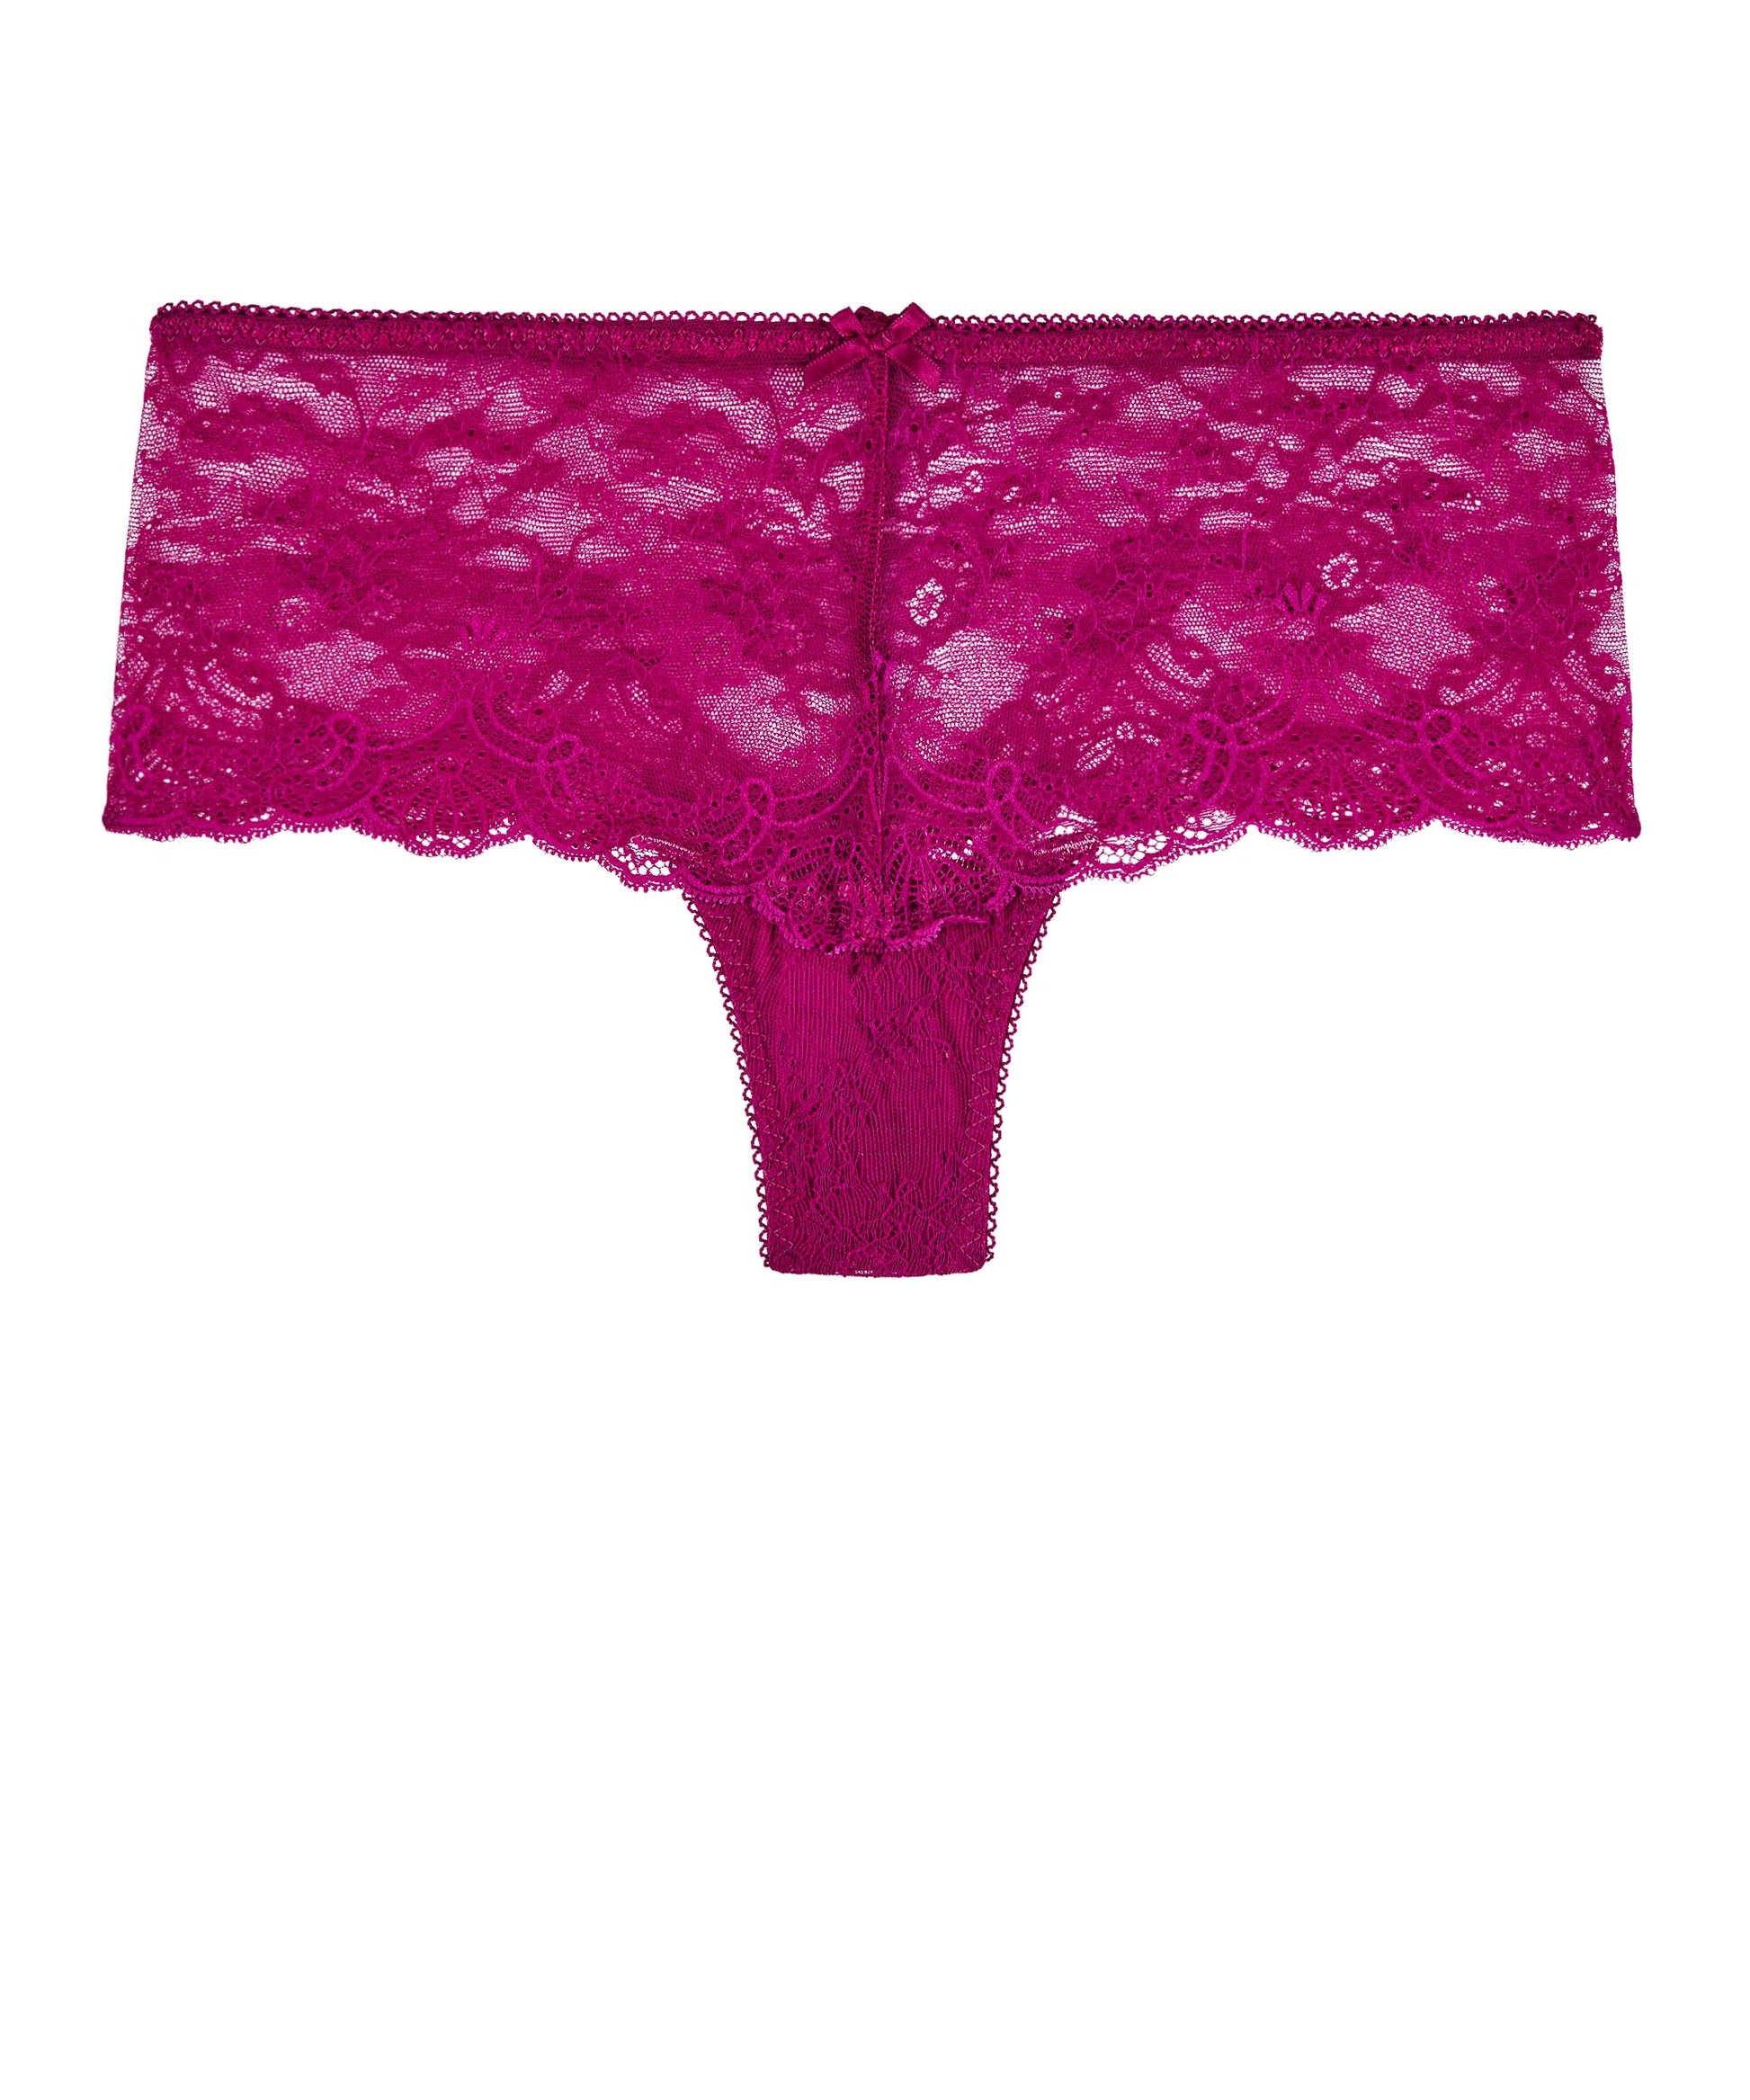 New Victoria Secret Pink Lace Bra and Panty Set Maldives